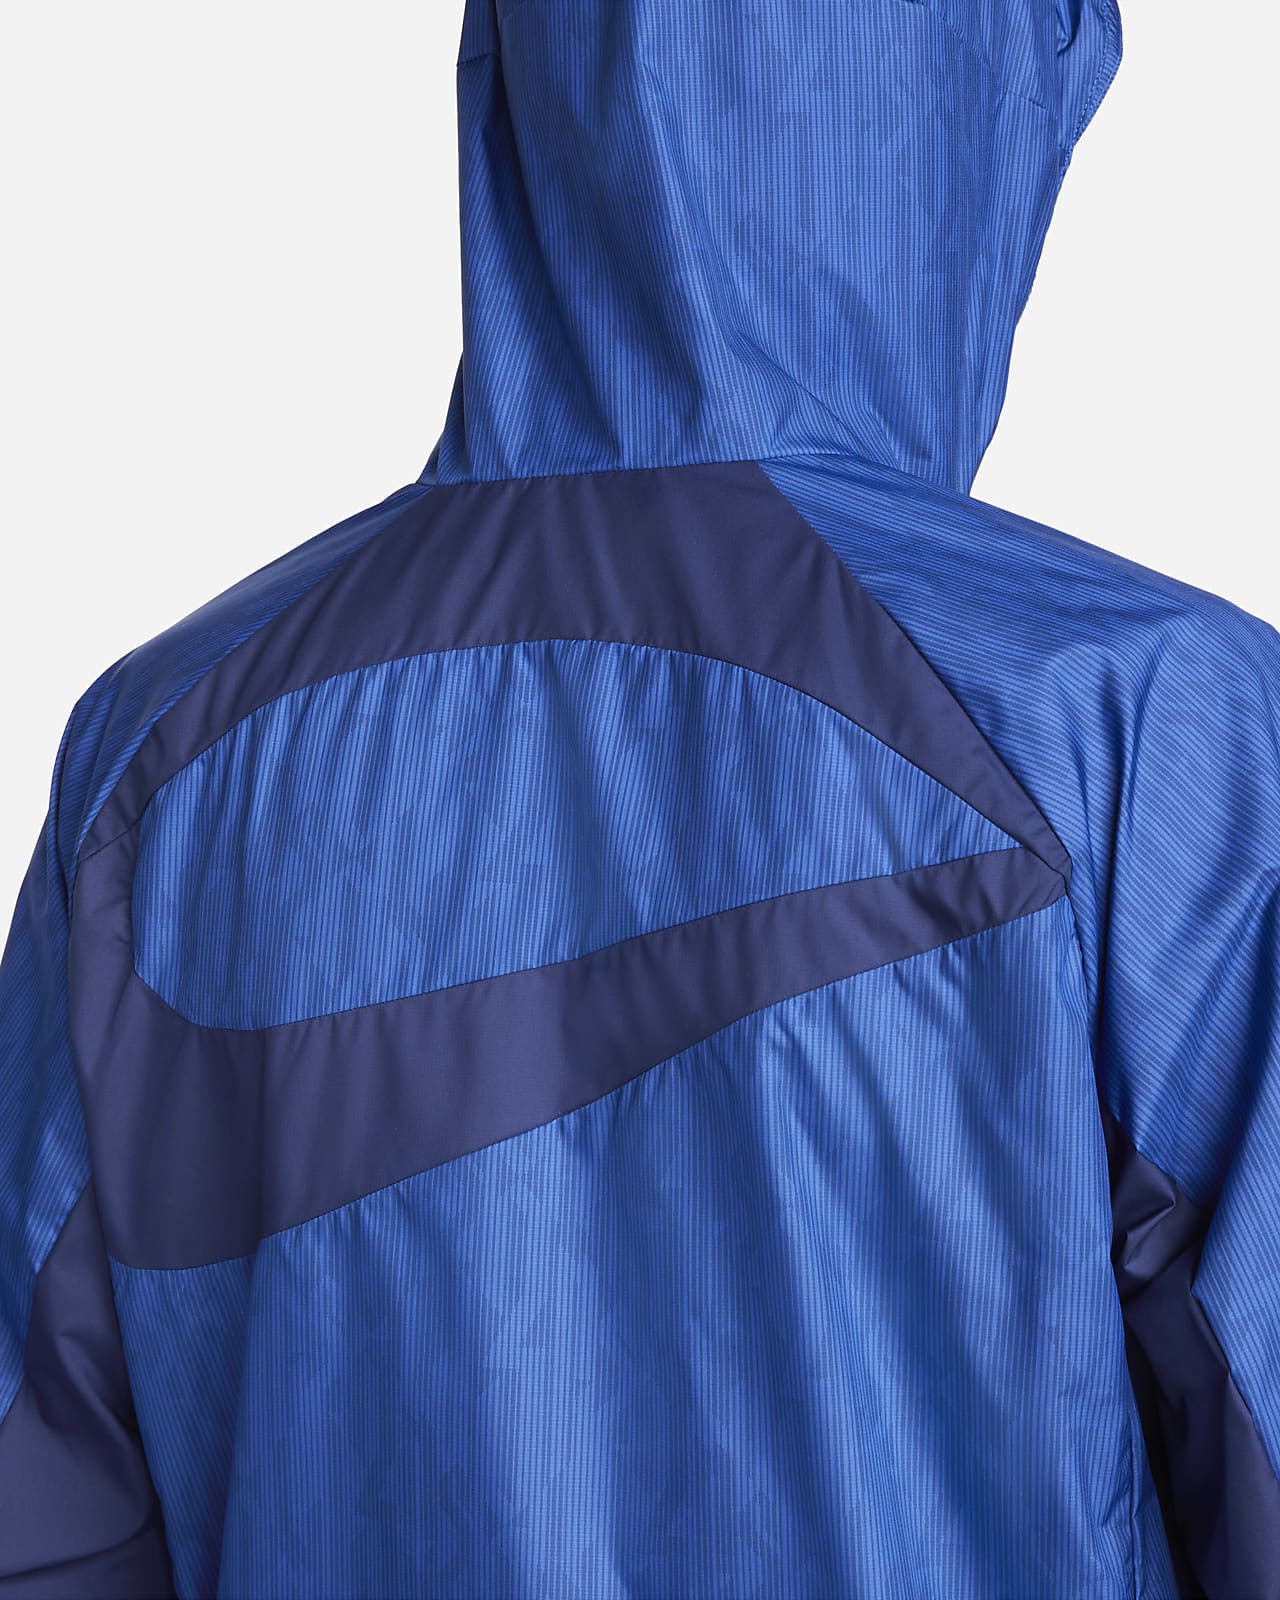 Nike U.S. AWF Men's Full-Zip Soccer Jacket